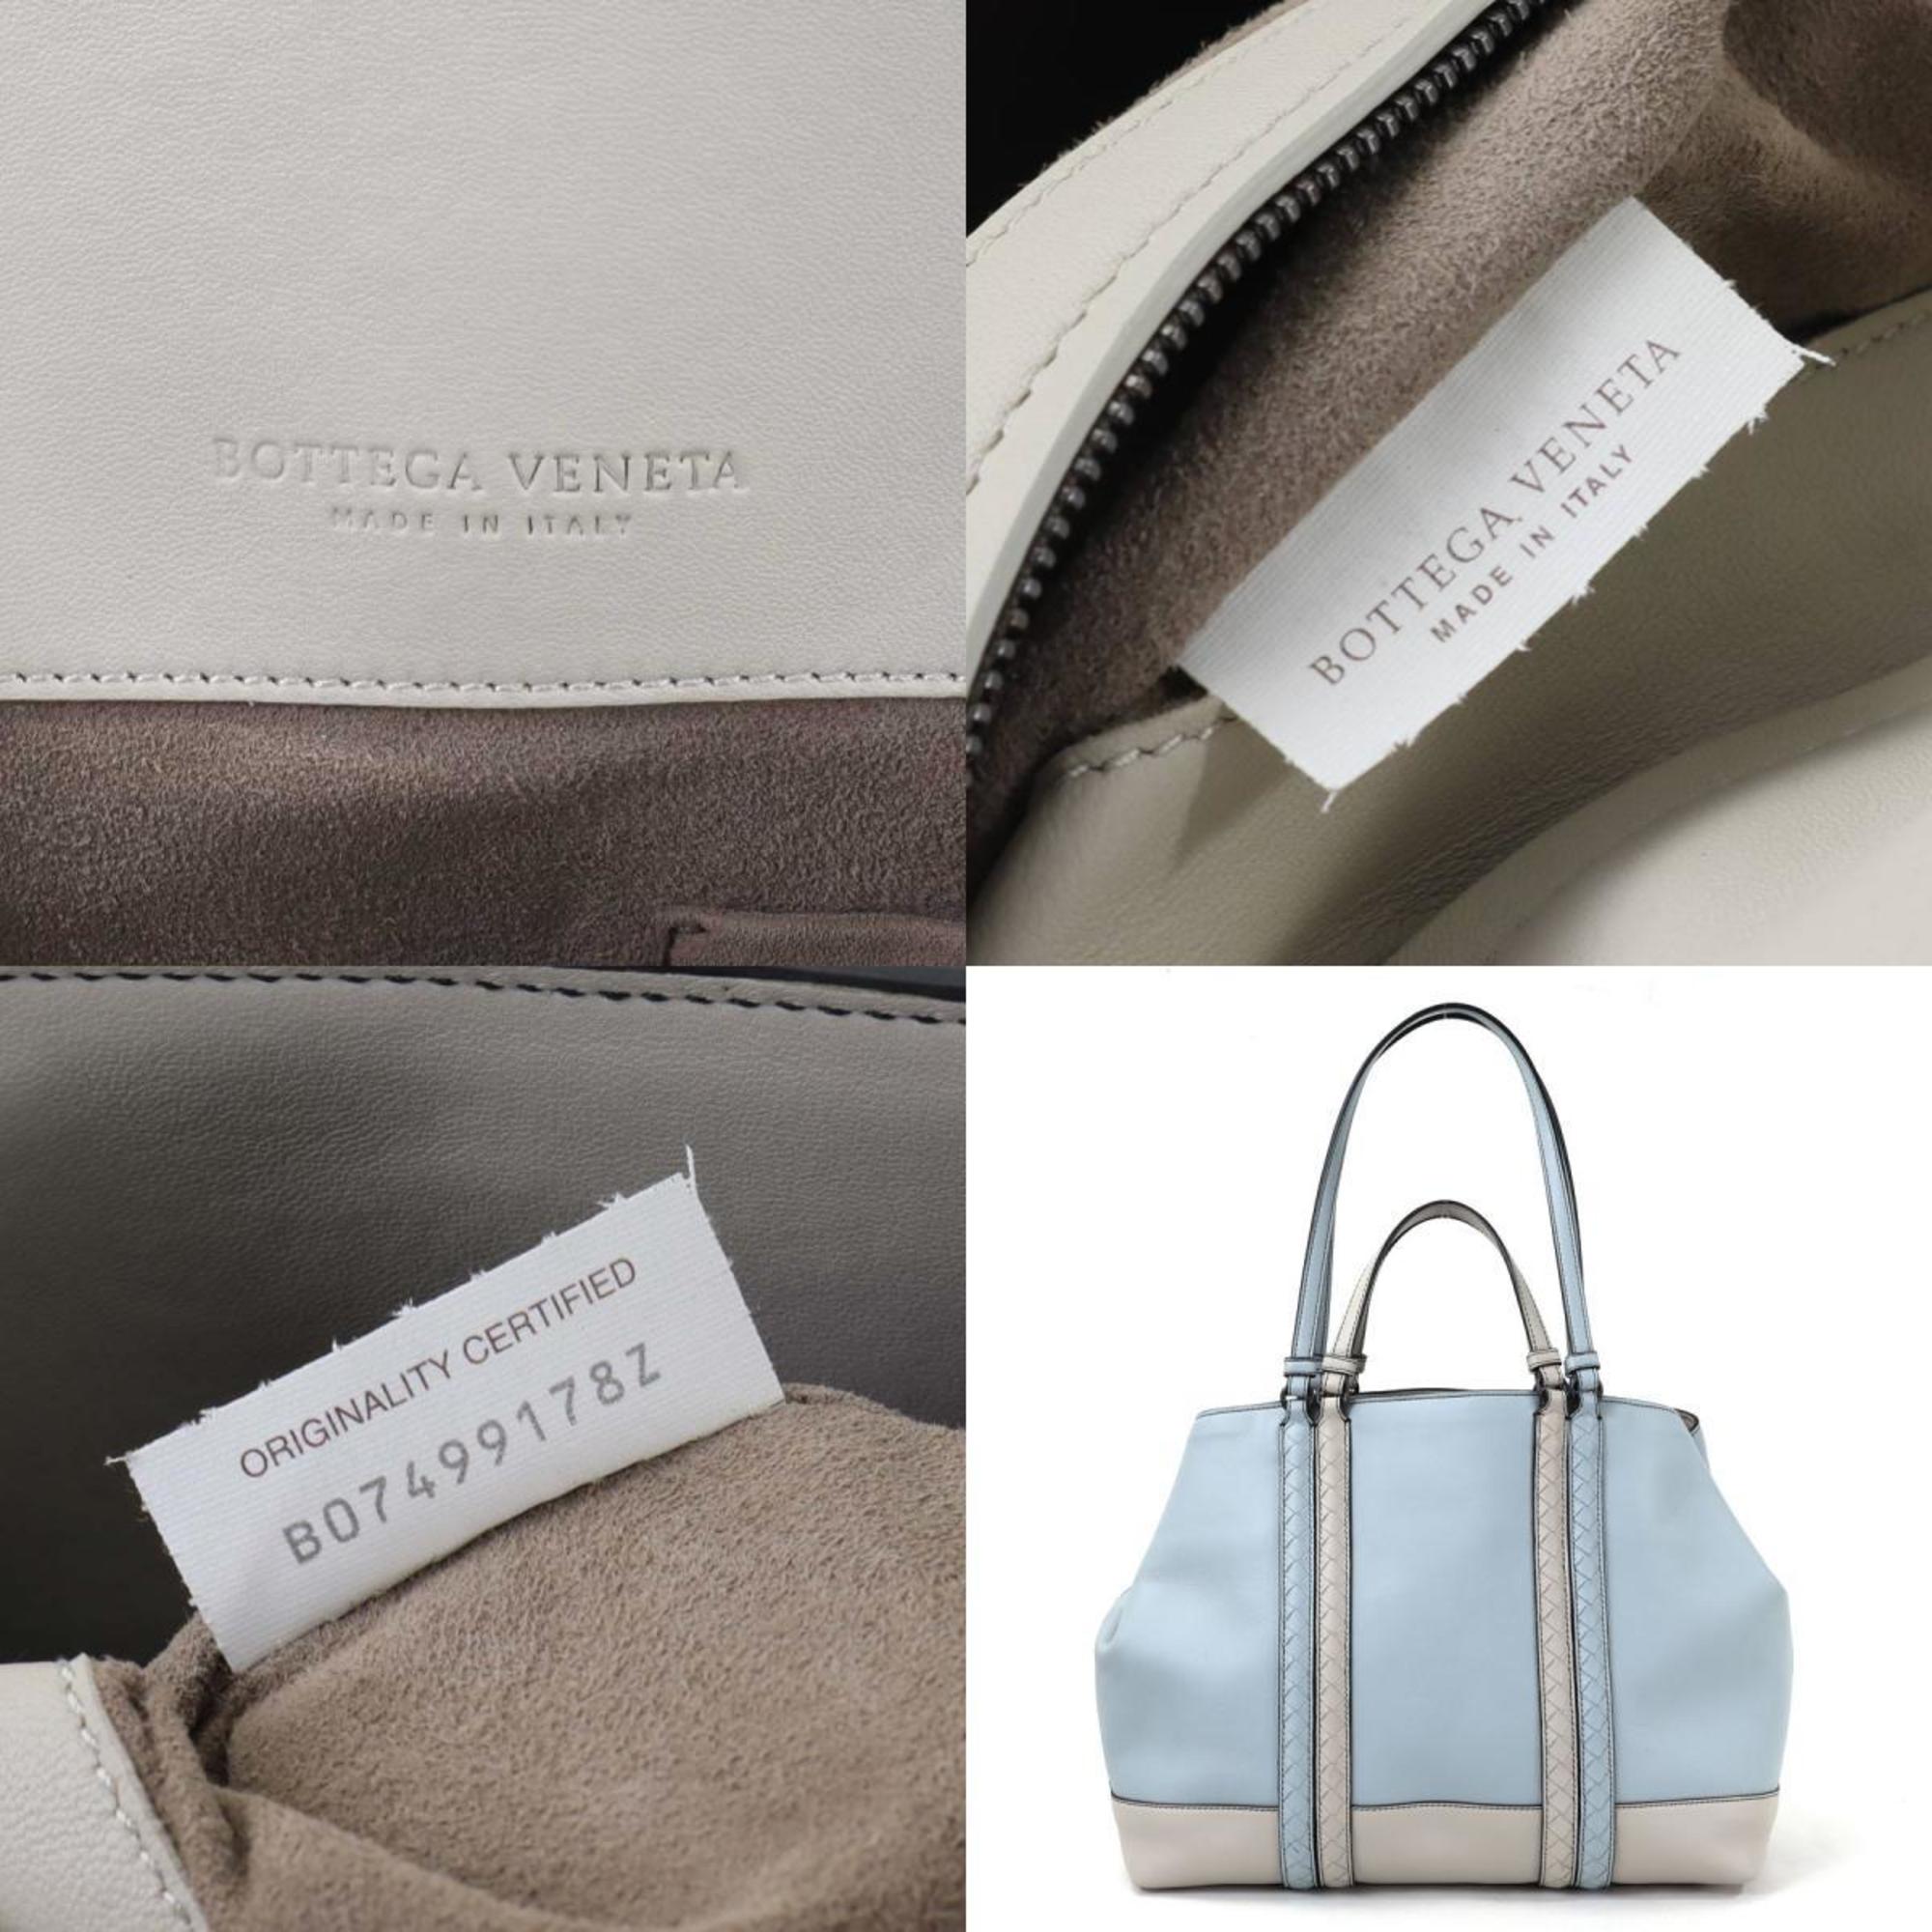 Bottega Veneta BOTTEGAVENETA Handbag Intrecciato Leather Light Blue x Gray Women's